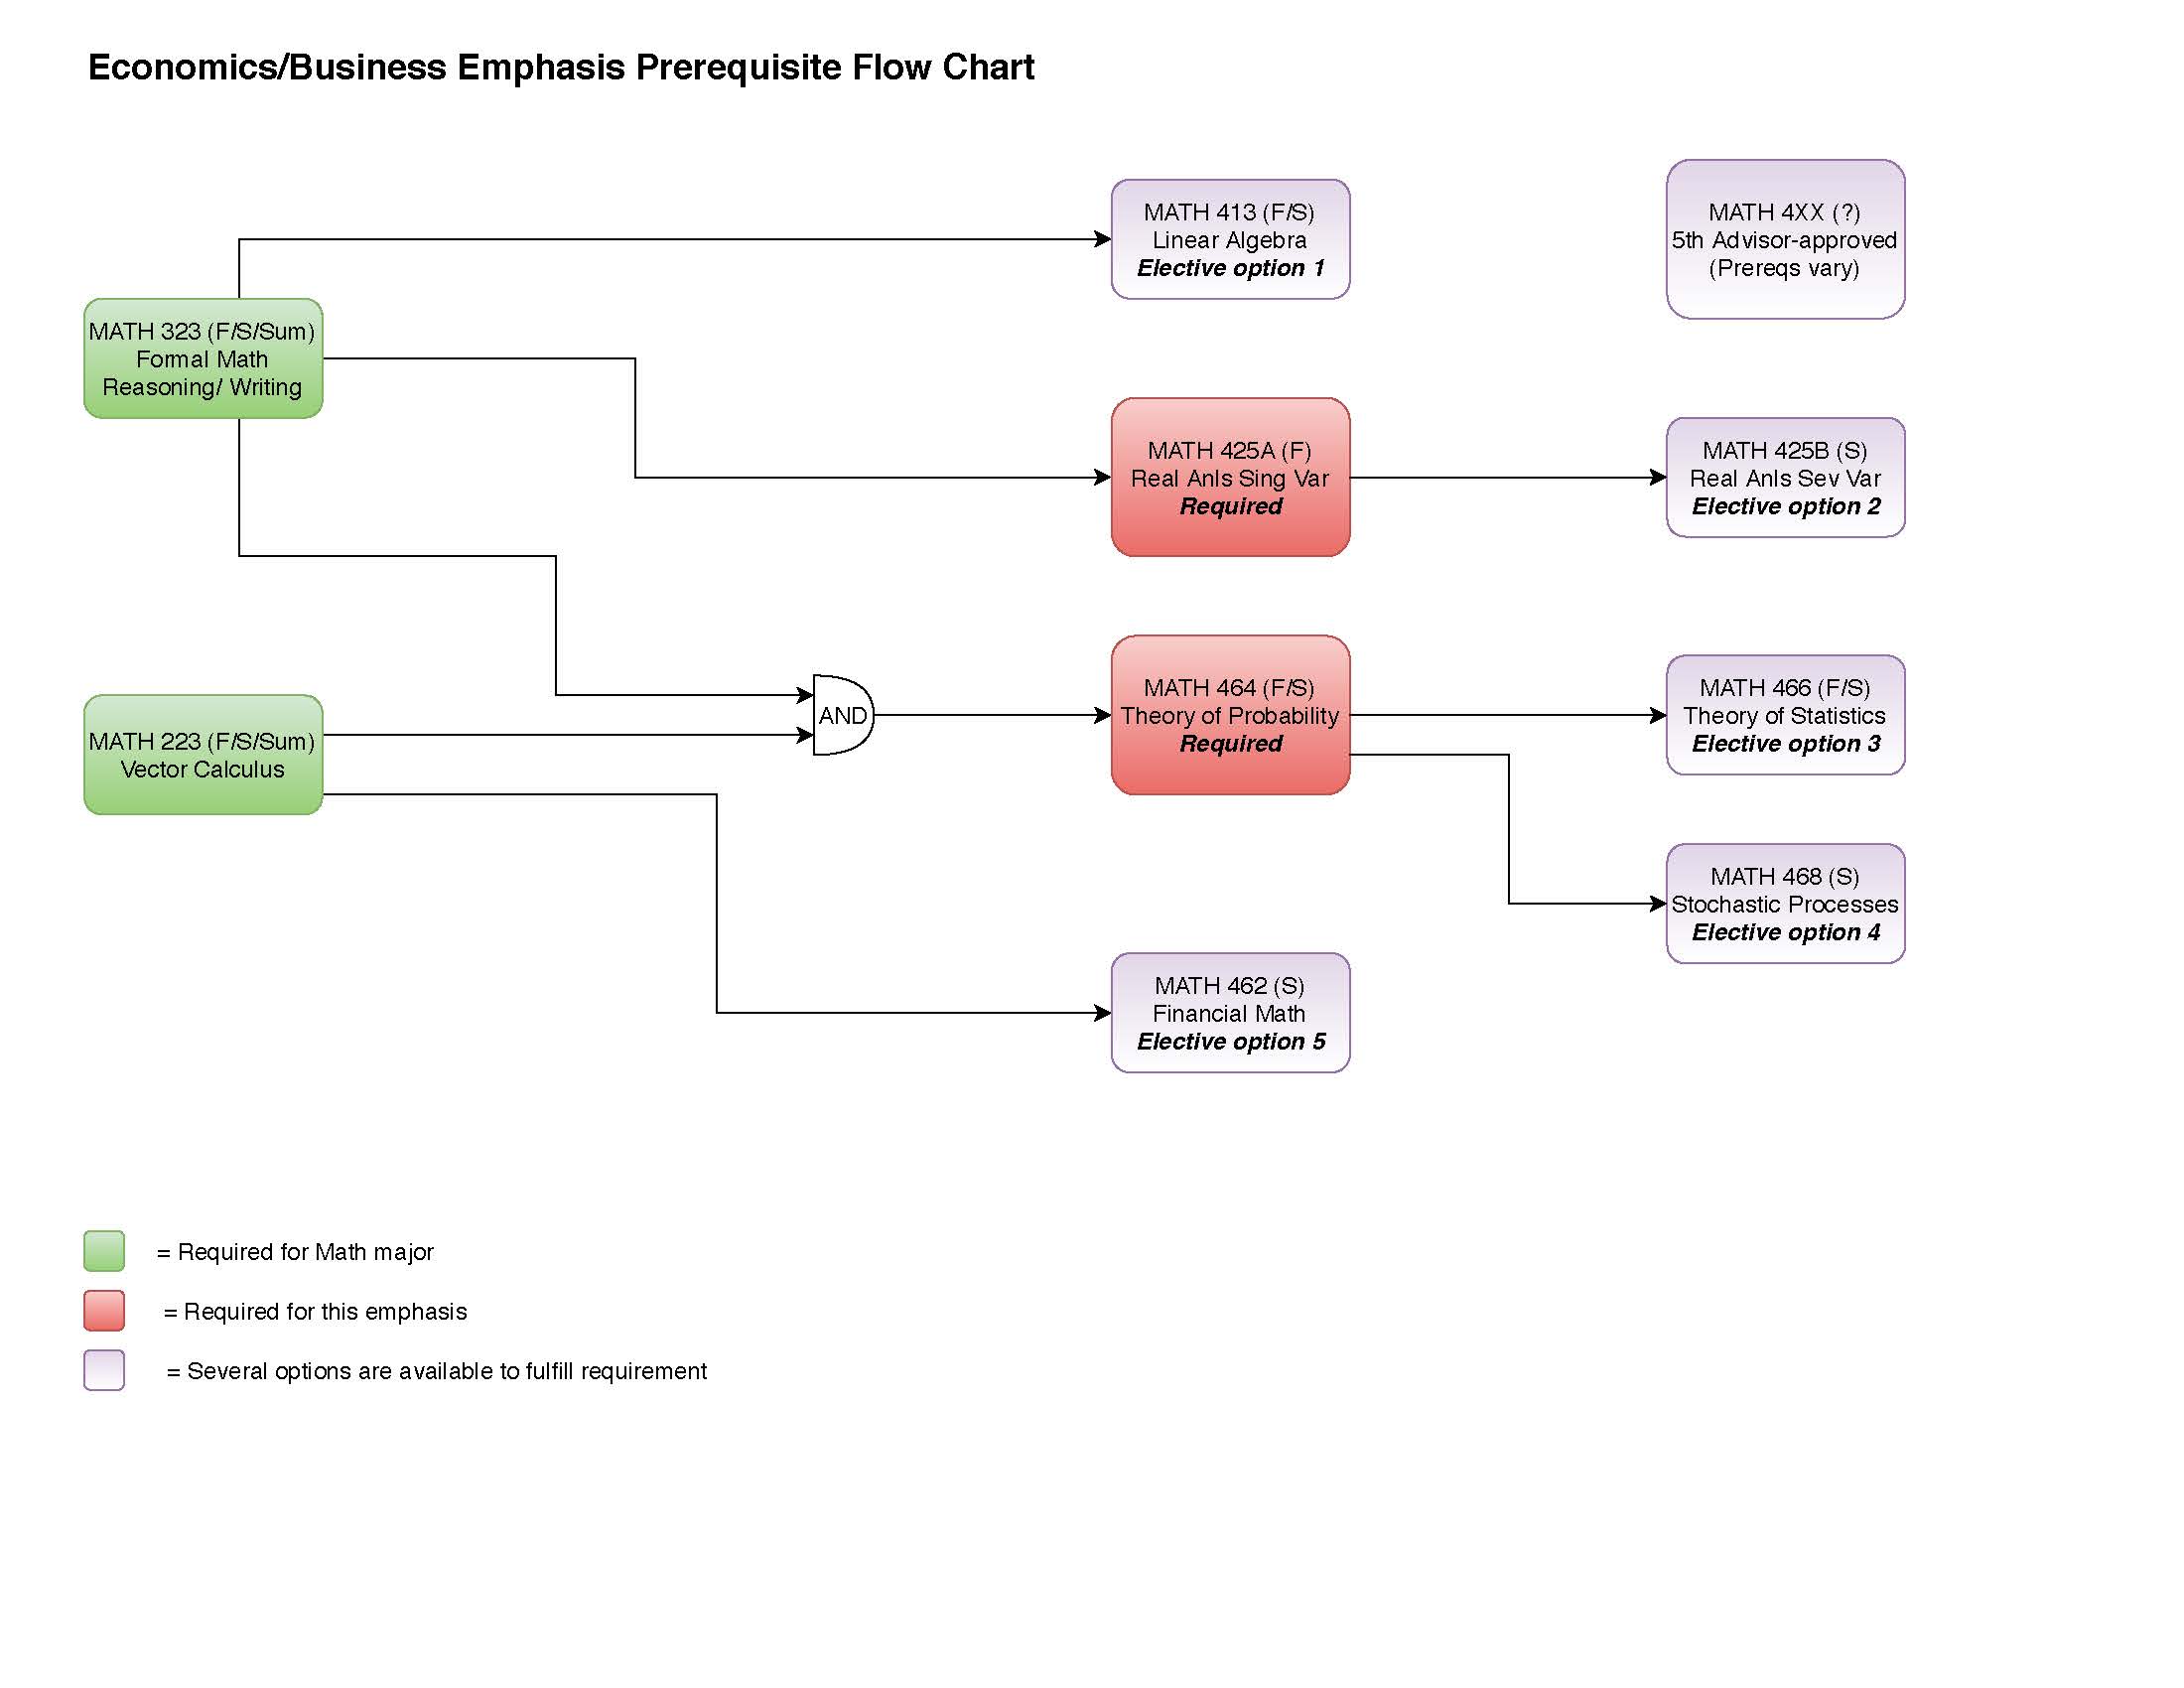 prerequisite flowchart for economics/business emphasis (click image for downloadable PDF)